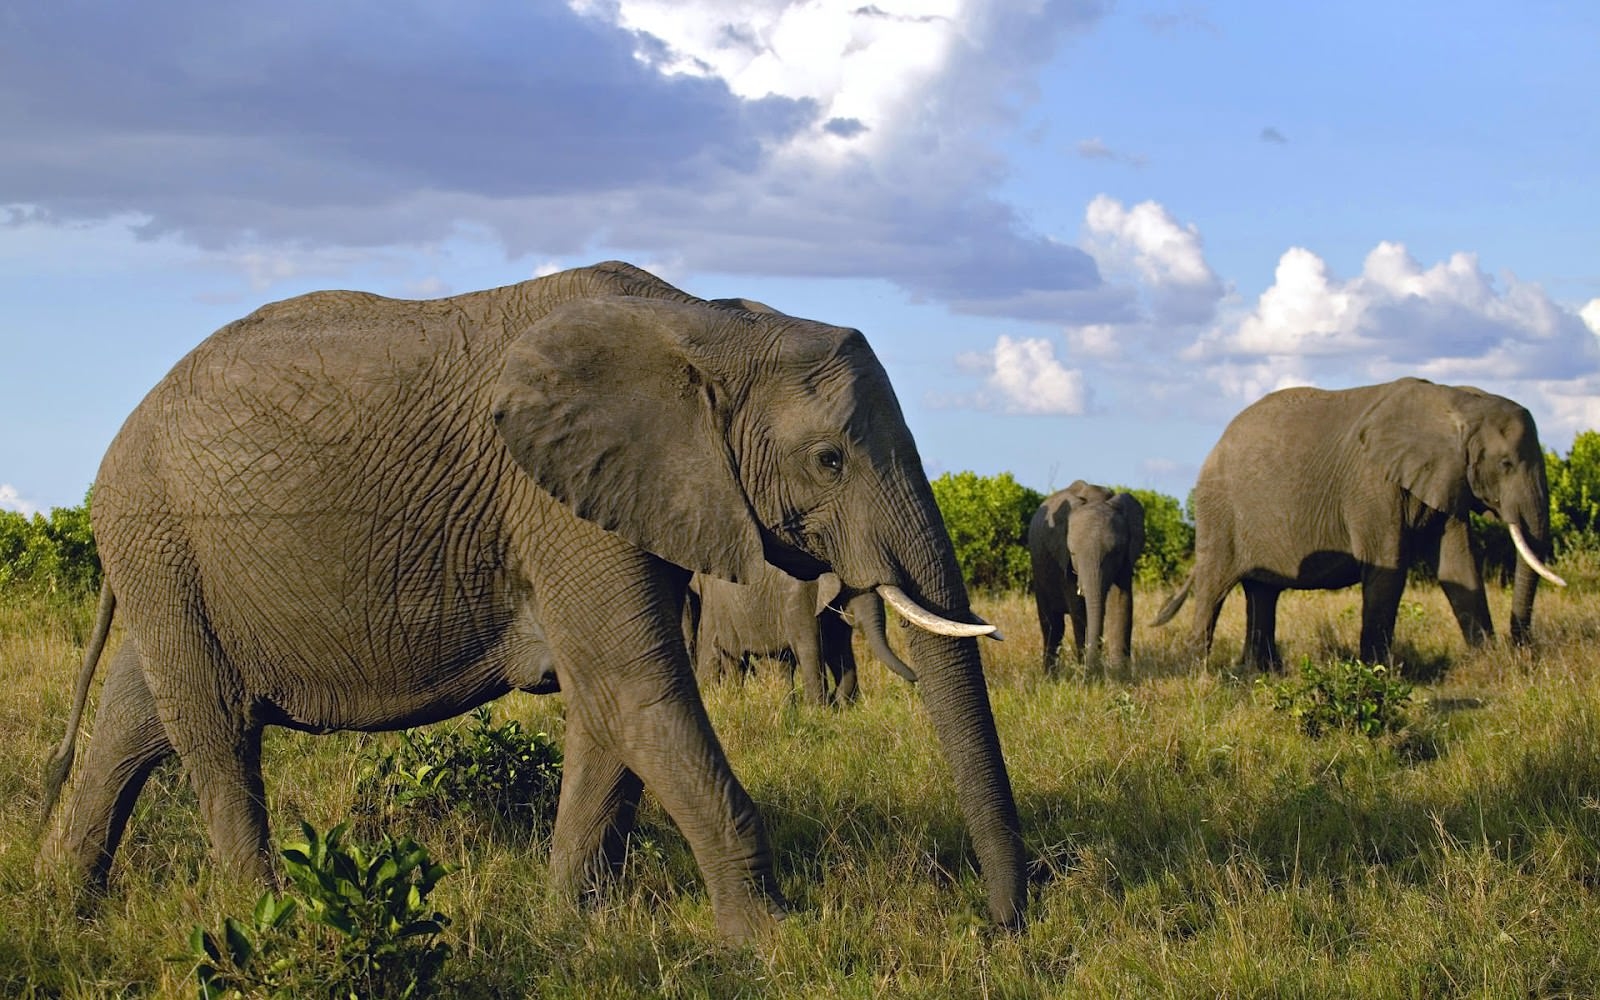 carta da parati elefante,elefante,animale terrestre,elefanti e mammut,natura,elefante indiano